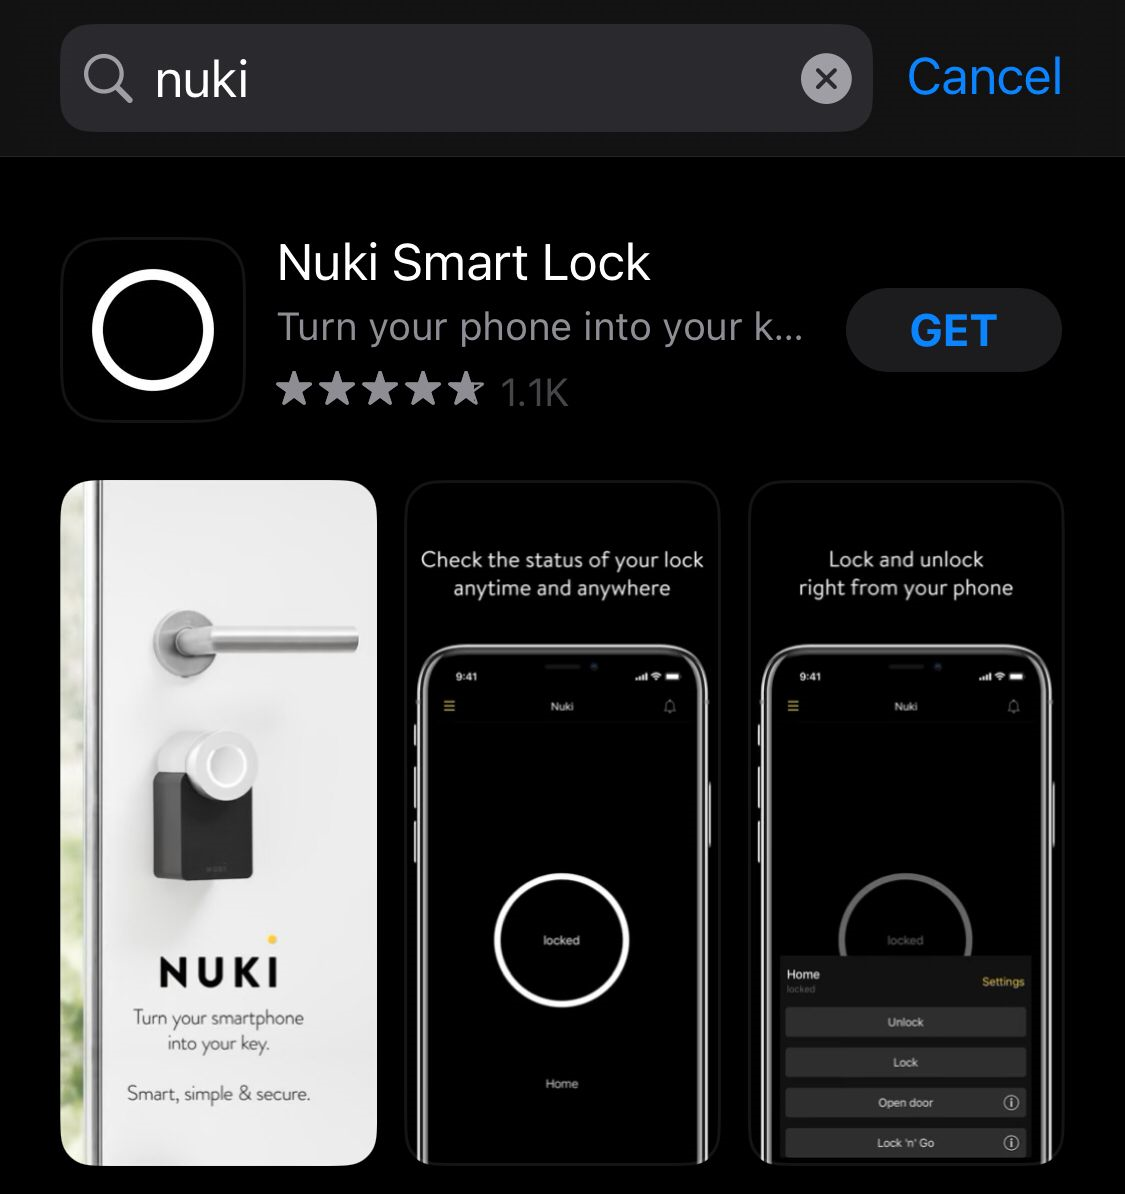 Download The Nuki Smart Lock App